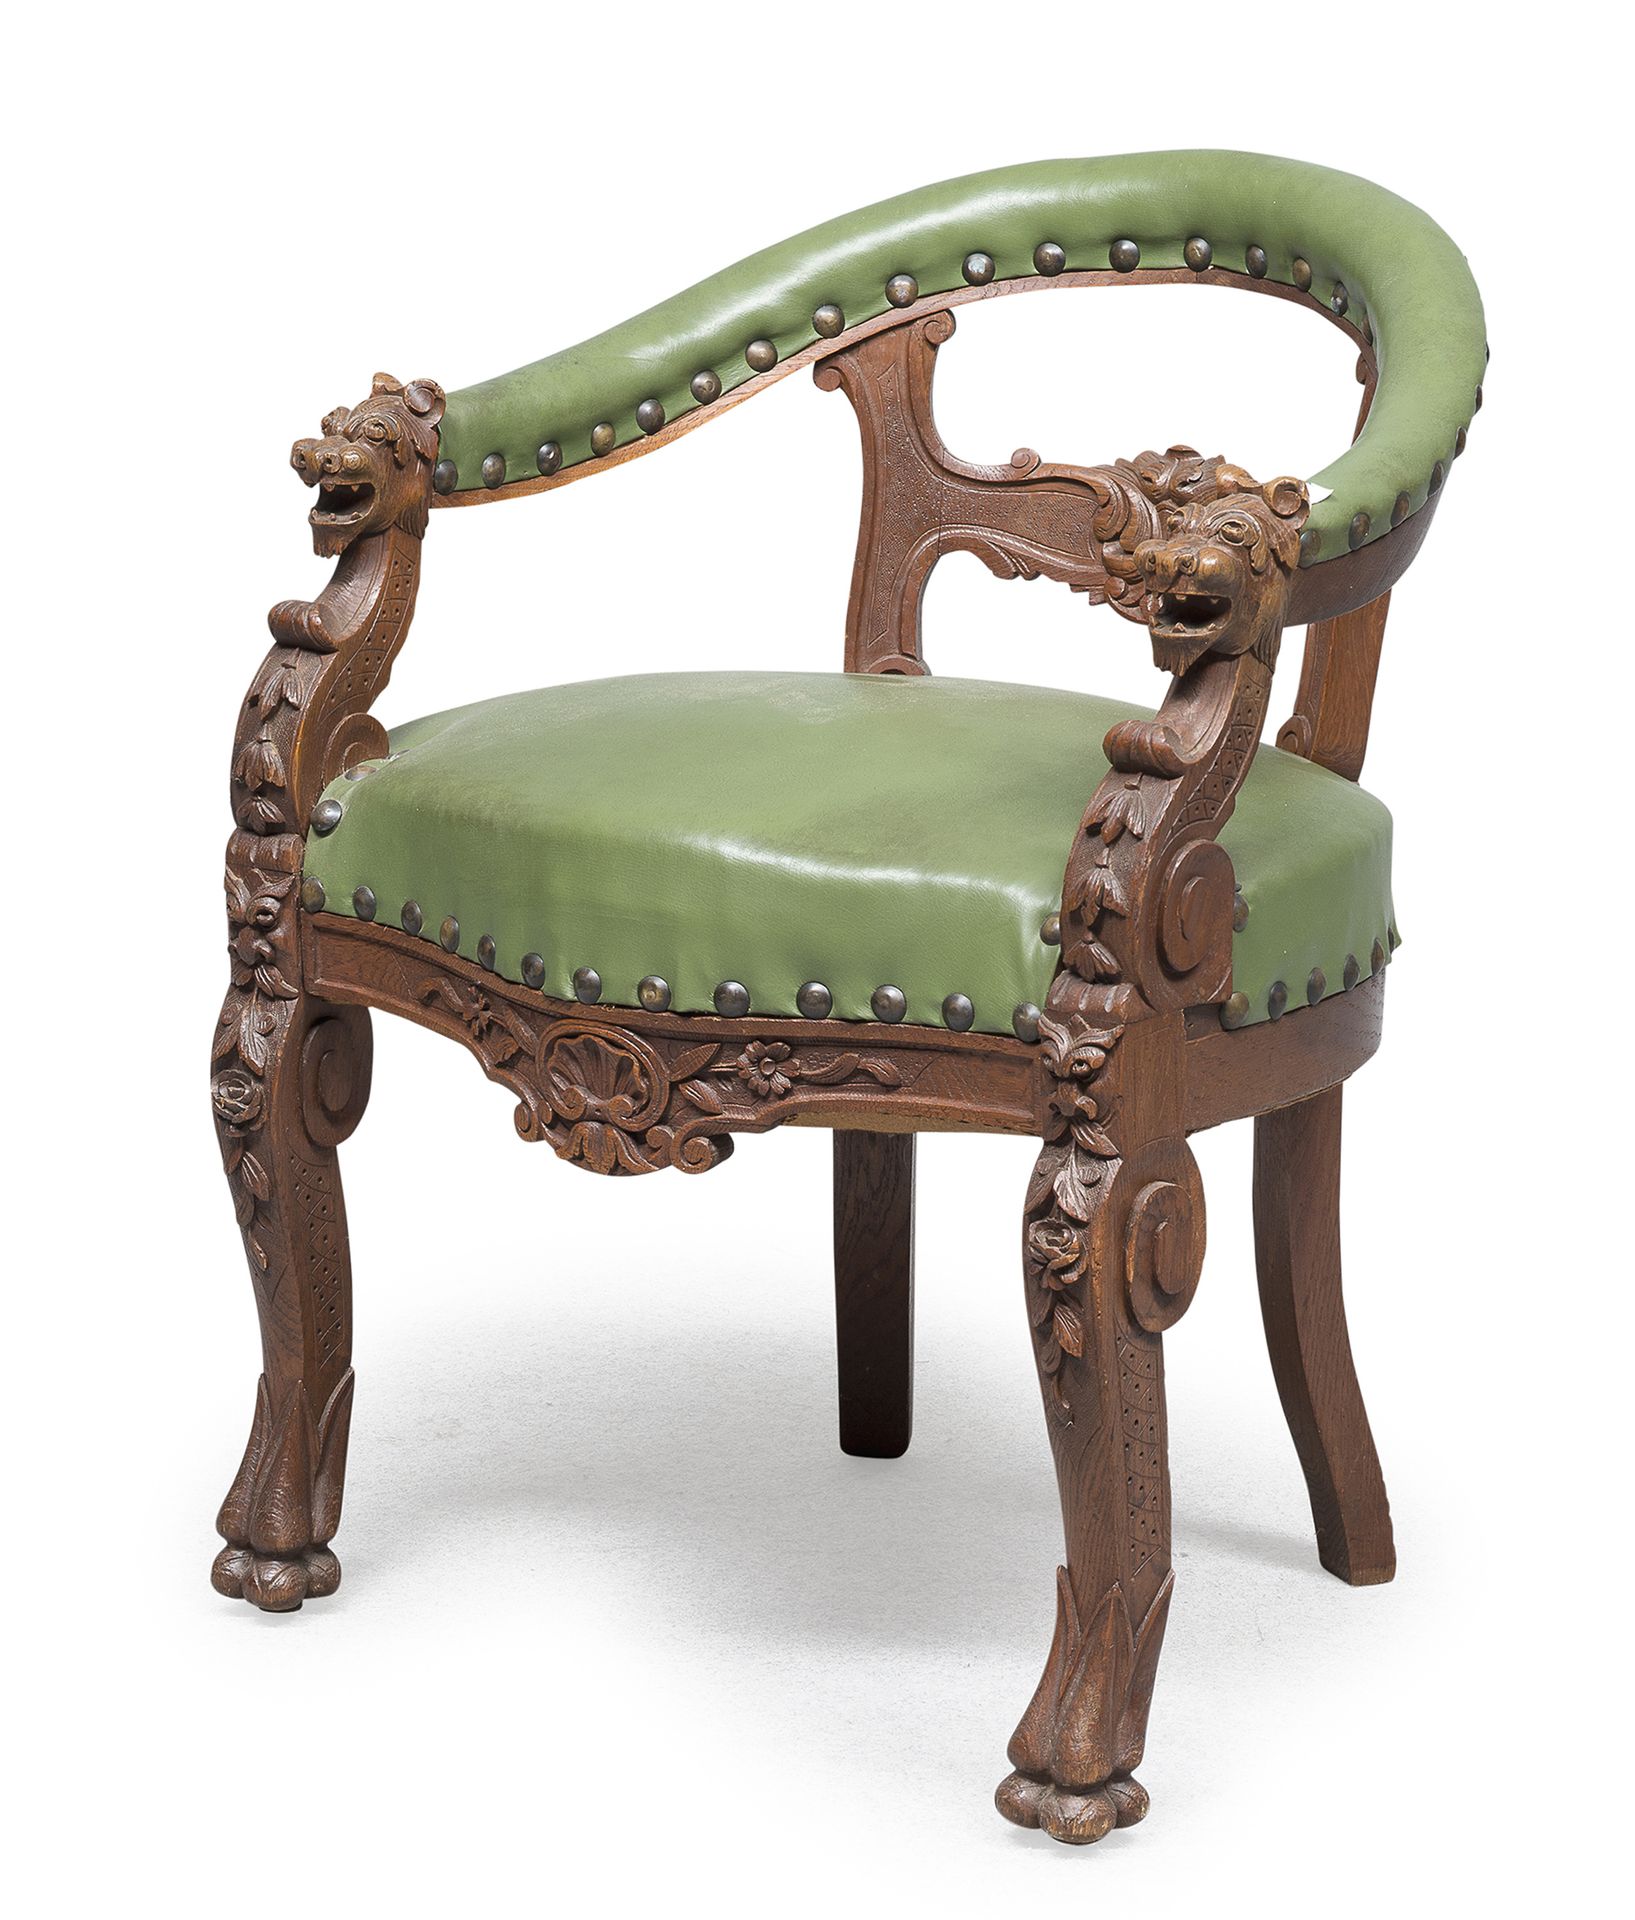 Null 胡桃木扶手椅，19世纪末


雕刻着新文艺复兴时期的图案，有旋钮和风格化的狗头。绿色皮革内饰。


尺寸为80 x 61 x 48厘米。